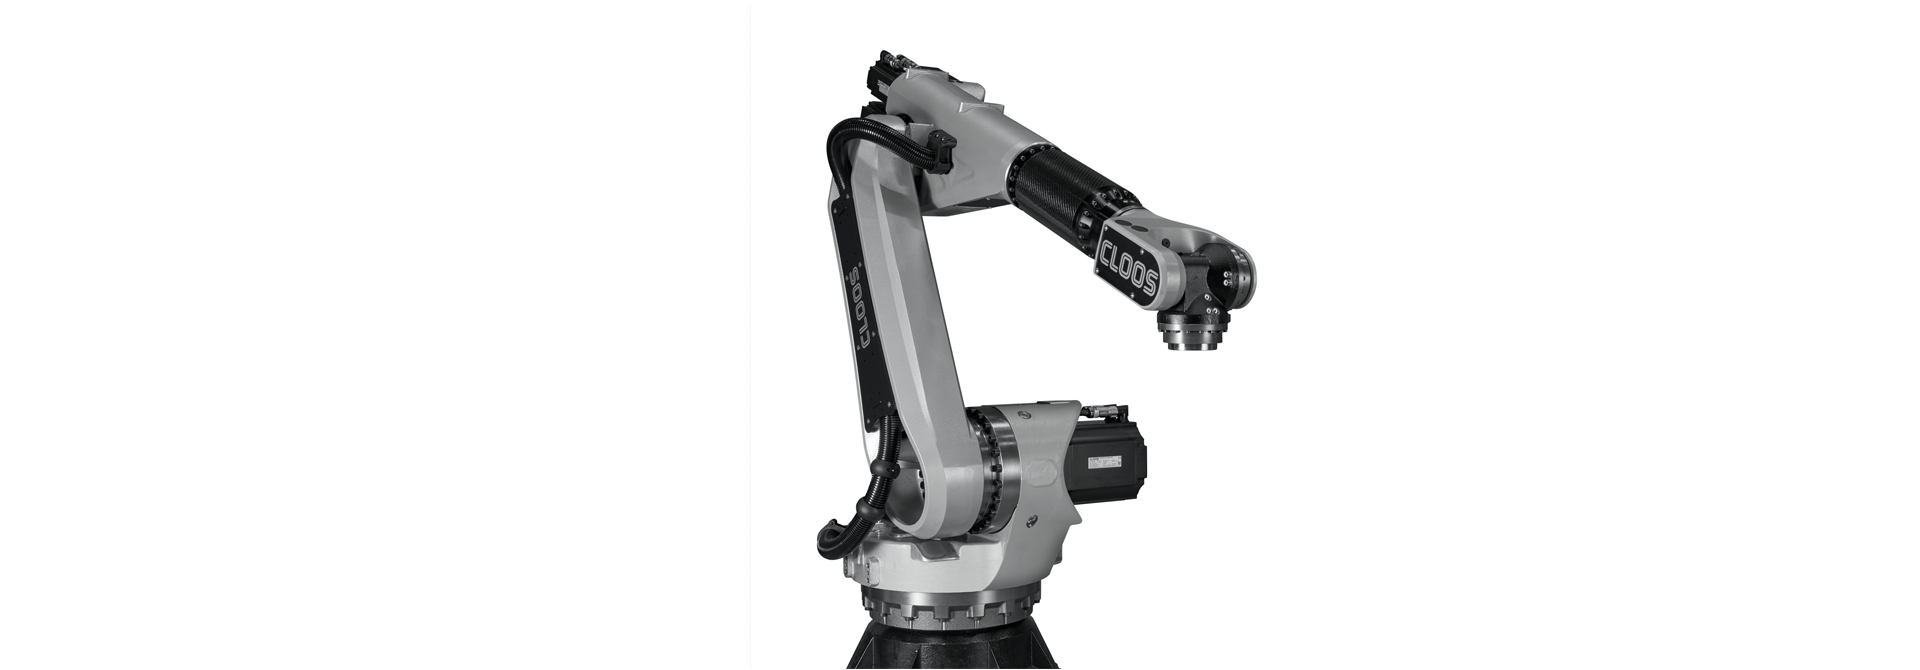 CLOOS提供性价比最高的焊接机器人